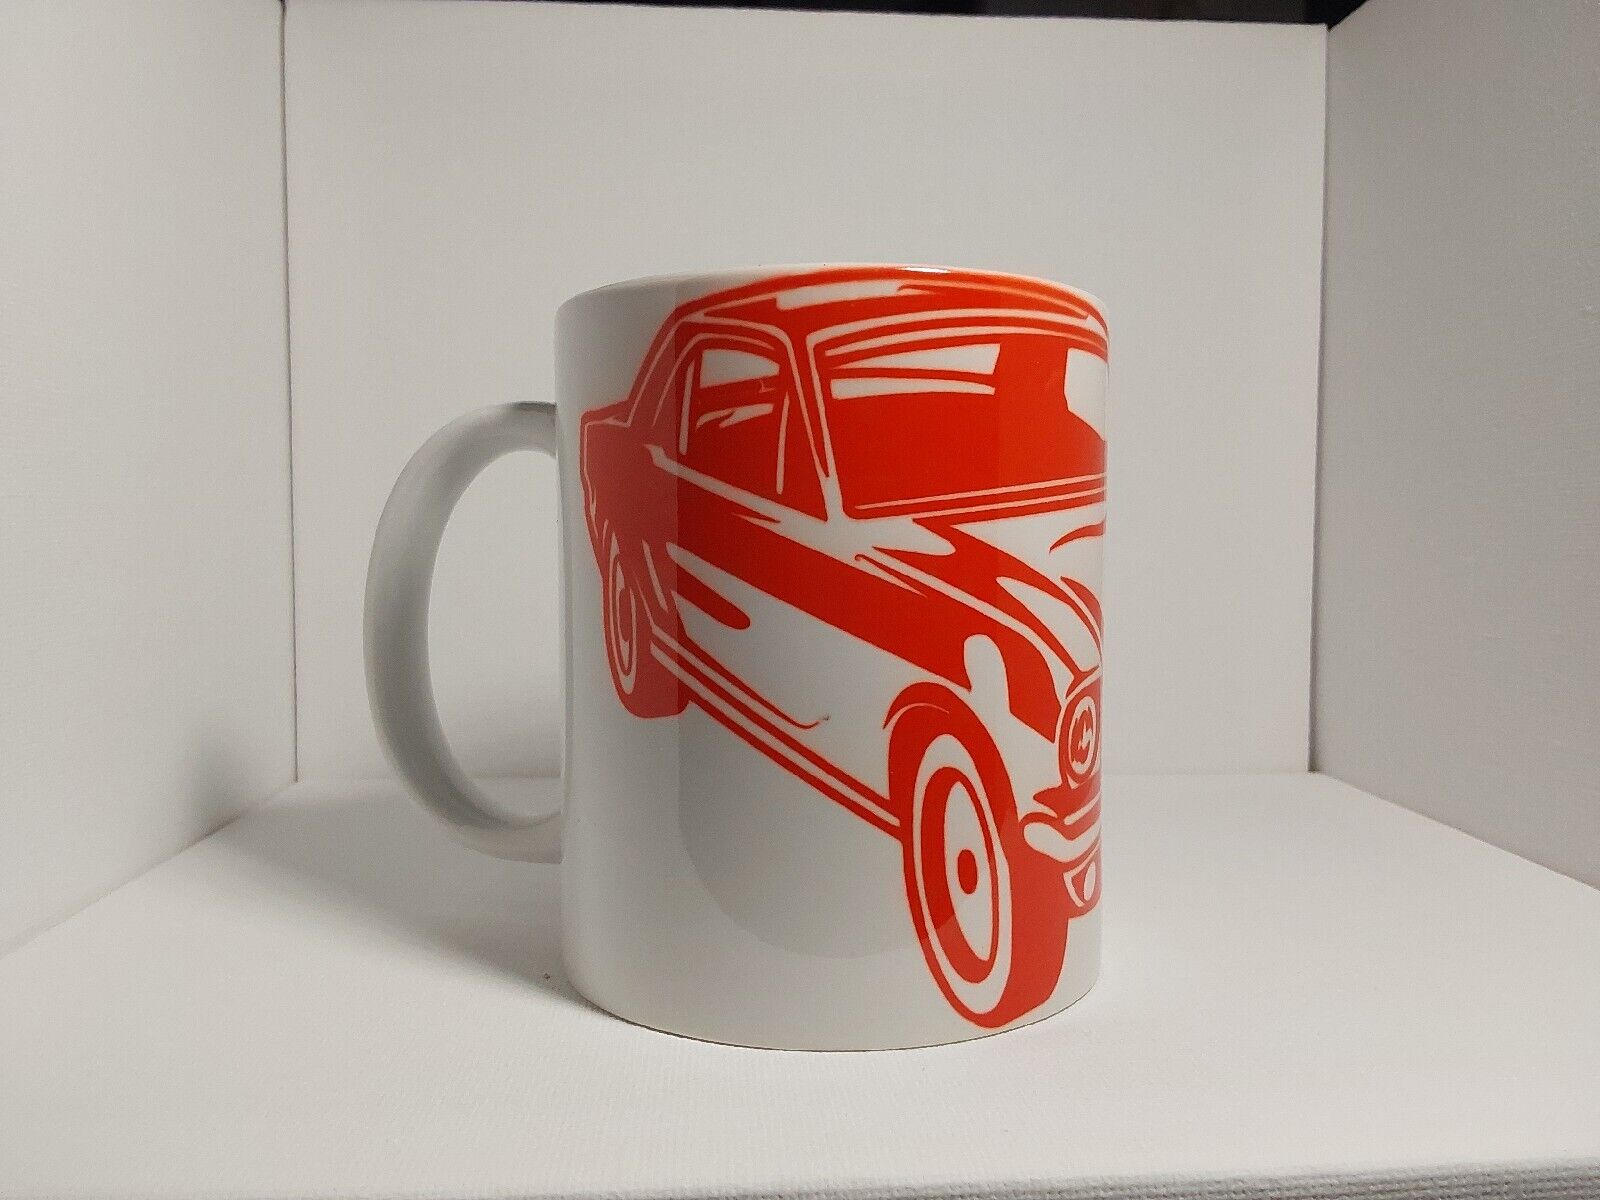 Handmade - Mustang Muscle Car Coffee Mug - Red wrap around design -Perfect Gift